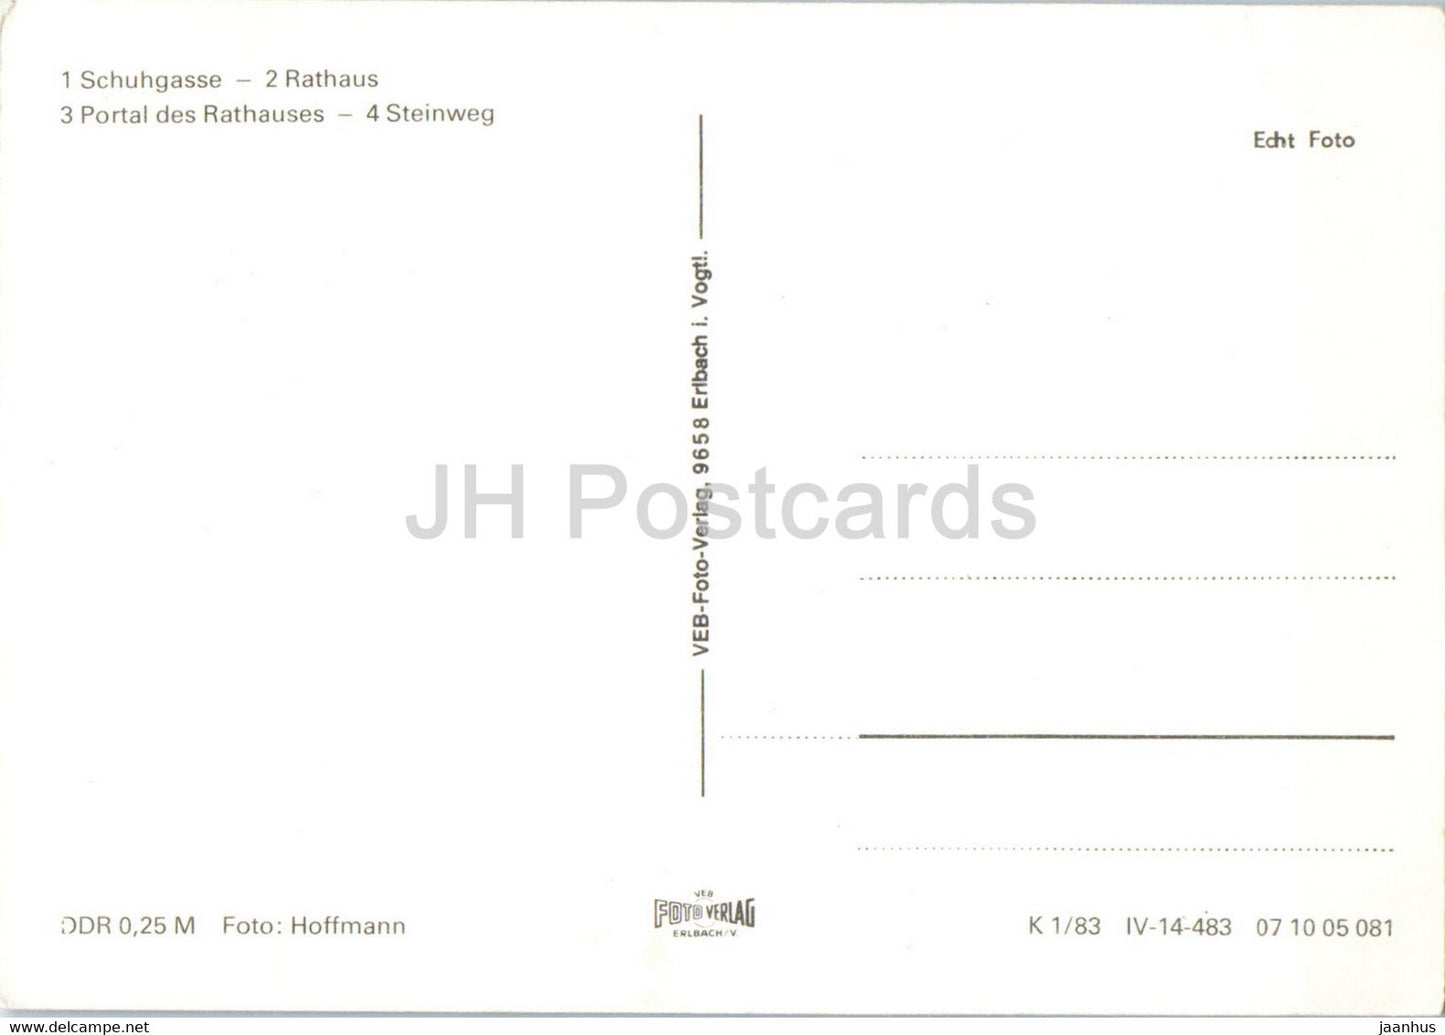 Possneck in Thuringen - Schuhgasse - Rathaus - Steinweg - old postcard - Germany DDR - unused